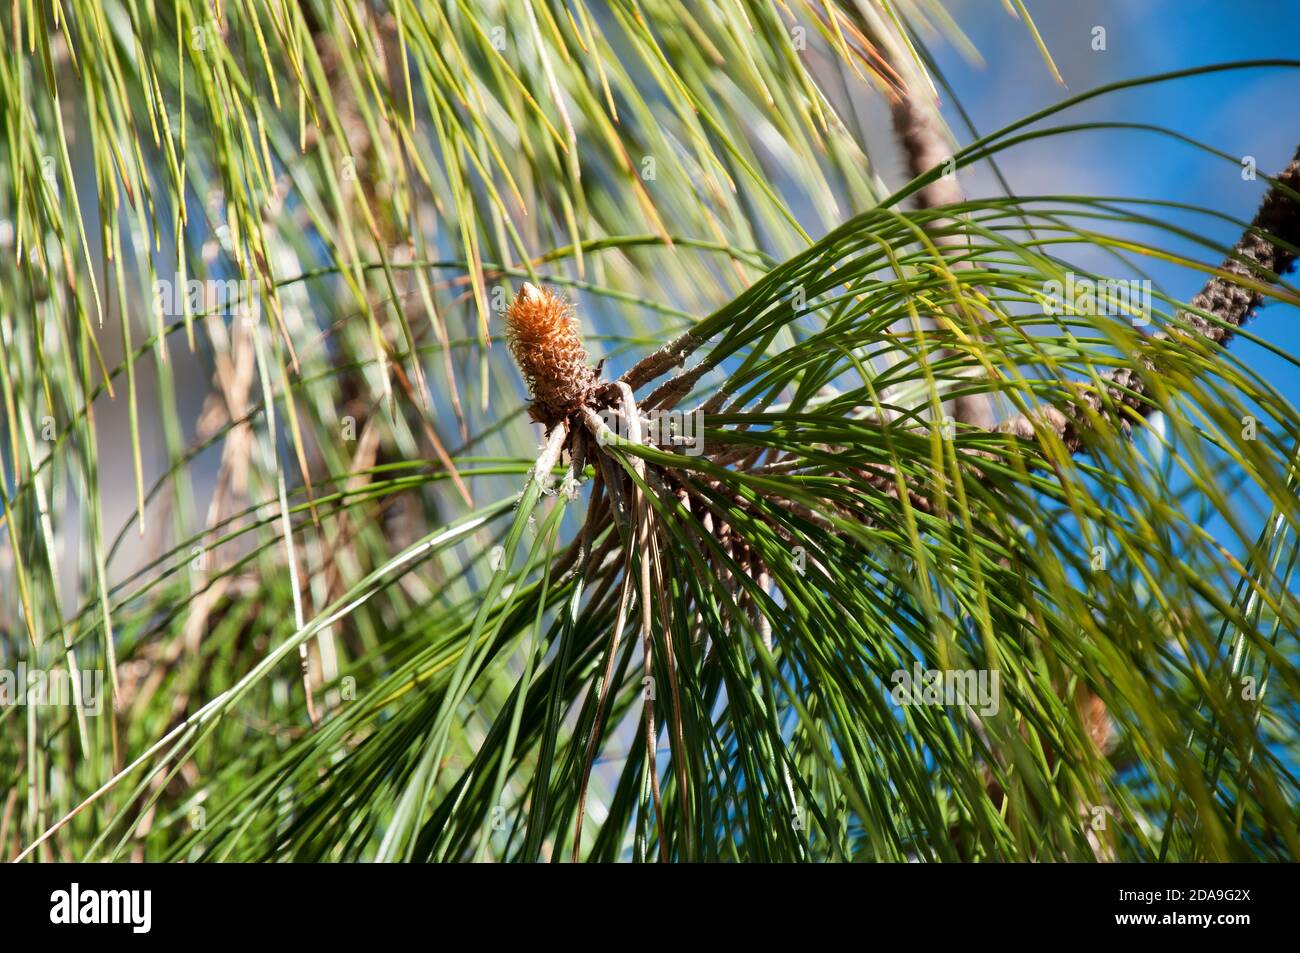 Sydney Australia, close-up of the flowering cone of a Pinus Roxburghii tree Stock Photo